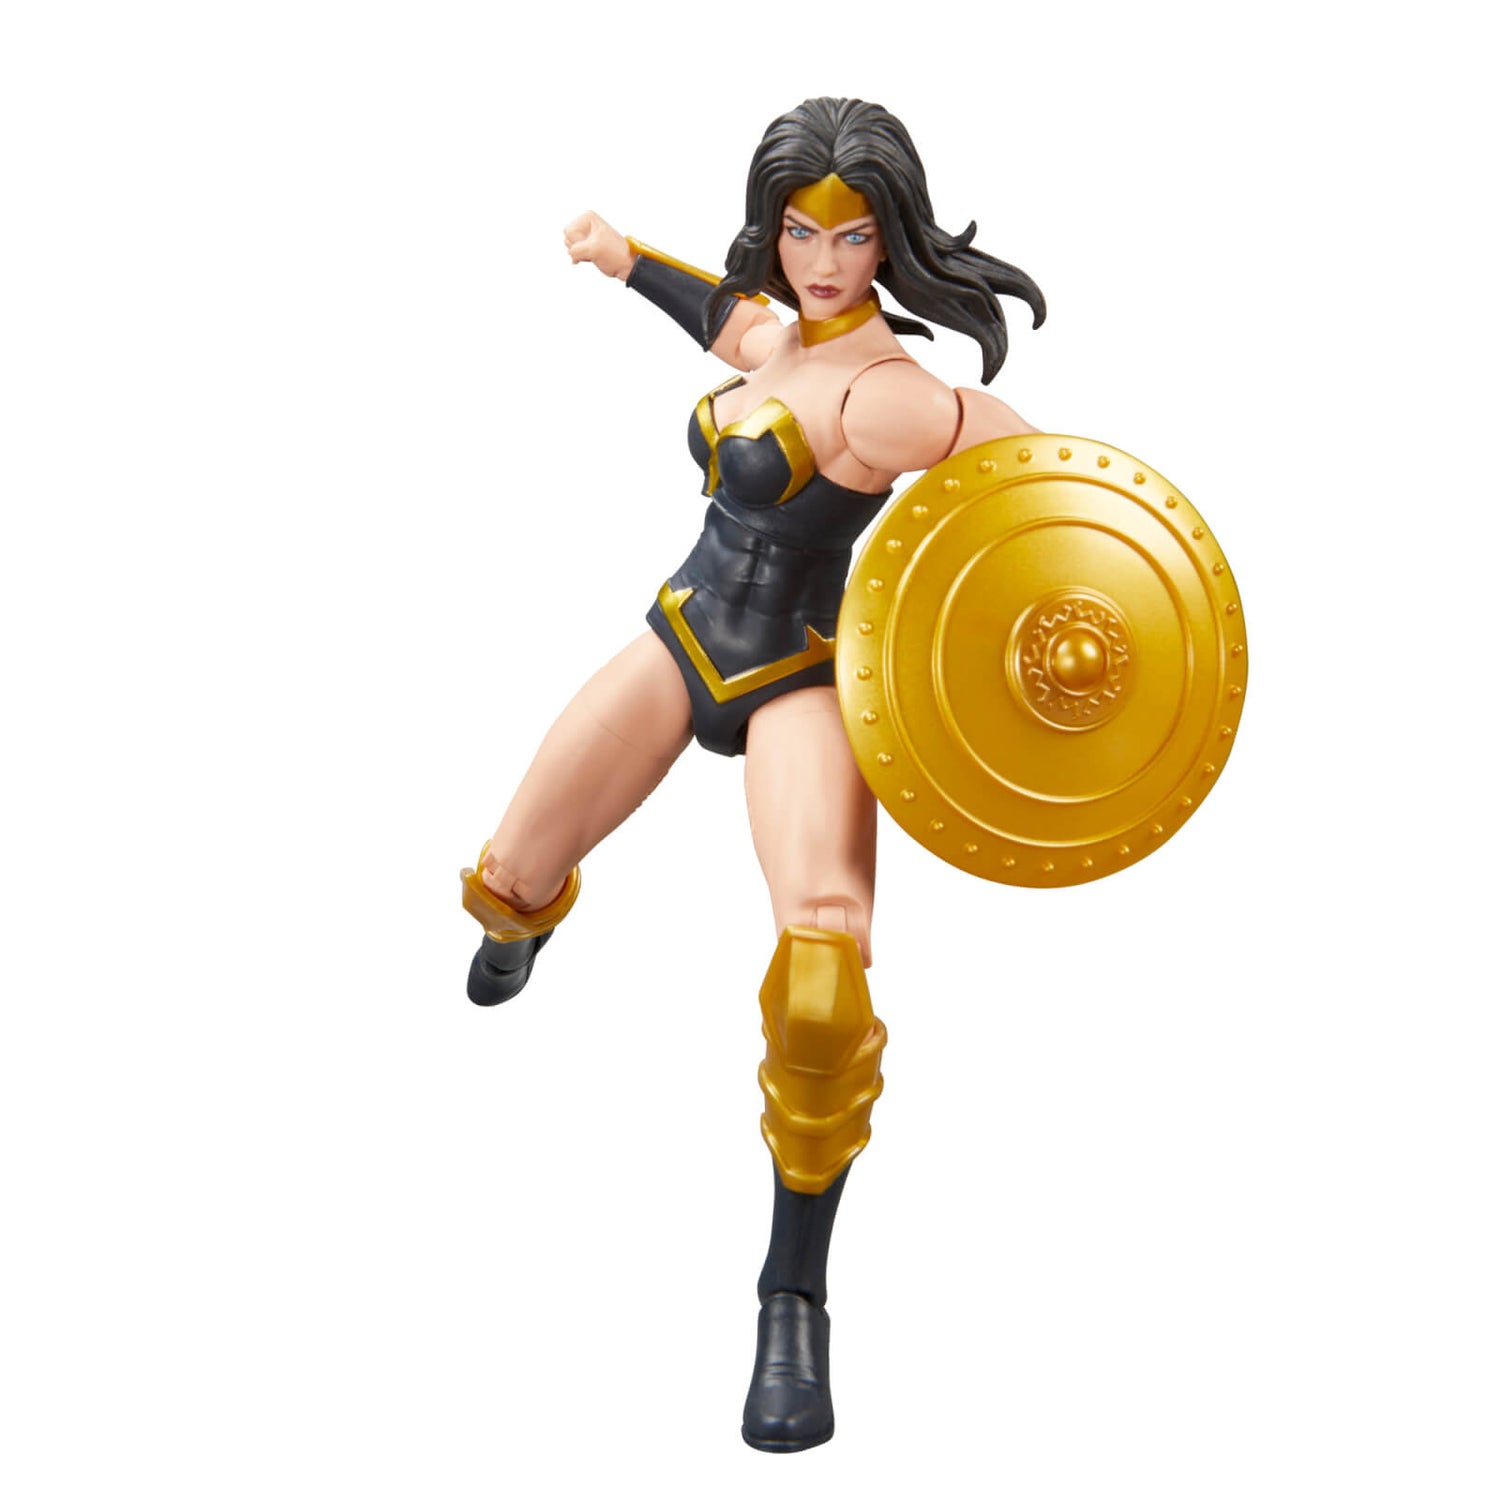 Hasbro Marvel Legends Series Squadron Supreme Power Princess, 6" Collectible Action Figure